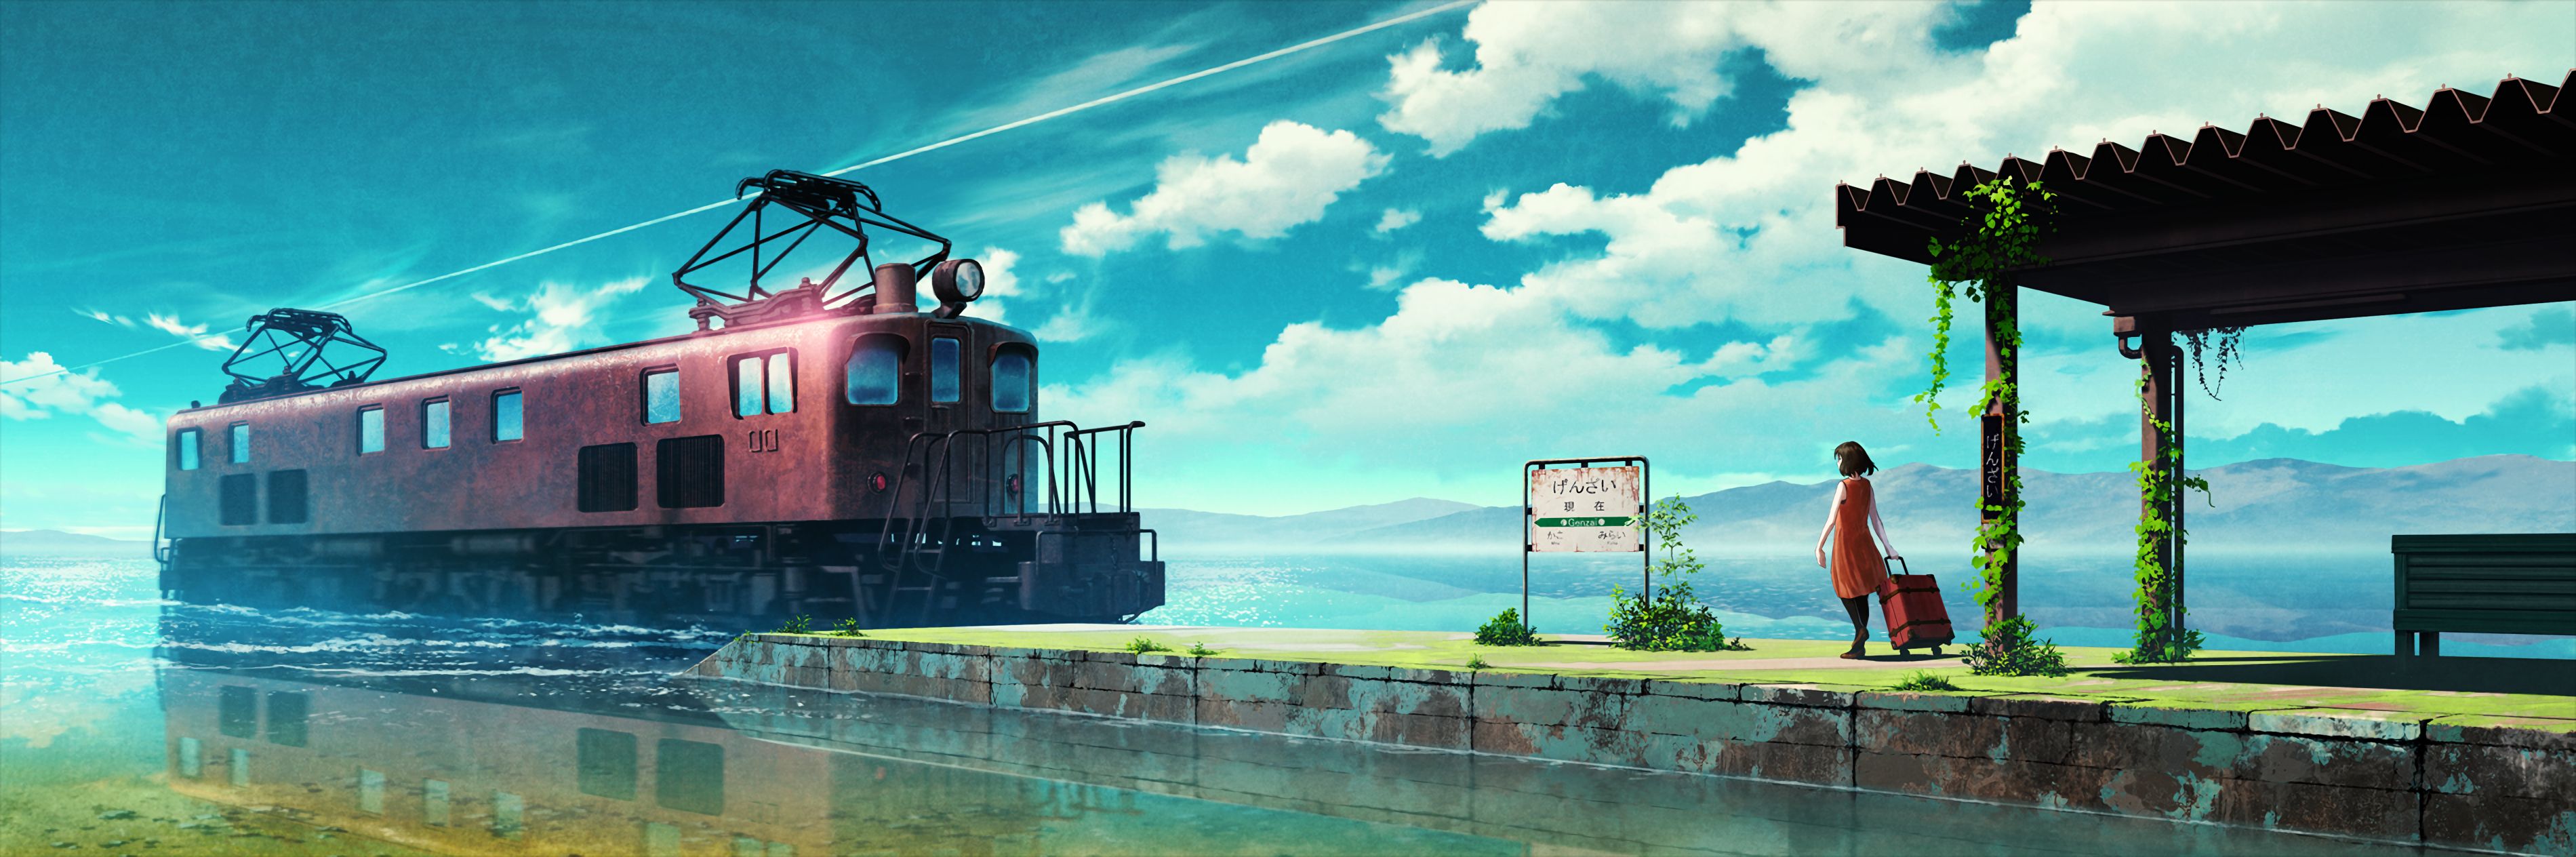 MikeHattsu Anime Journeys: Your Name - Hida-Furukawa Station